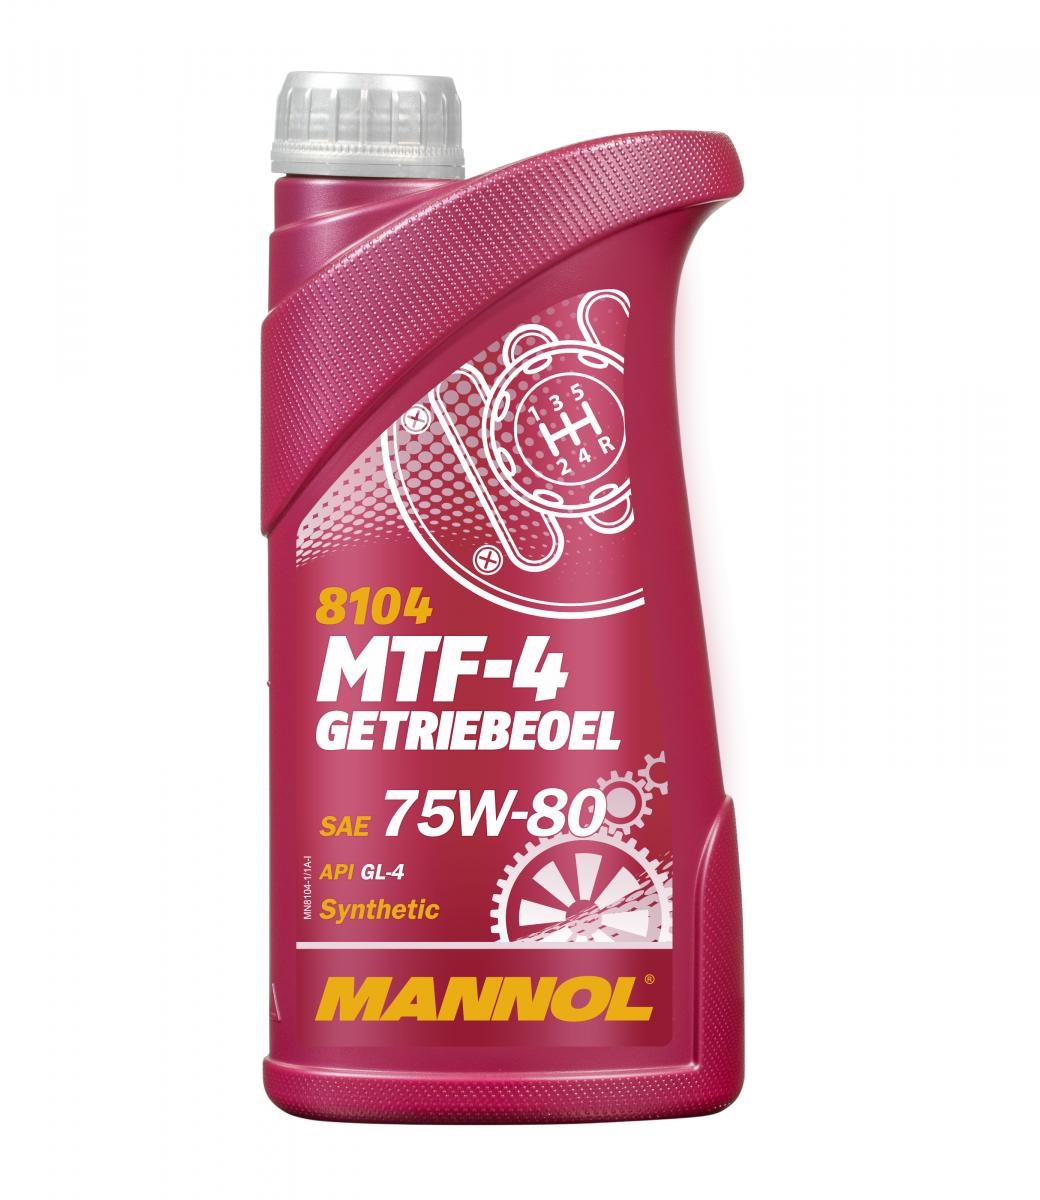 MANNOL MTF-4, GL-4 MN8104-1 BUELL Getriebeöl Motorrad zum günstigen Preis